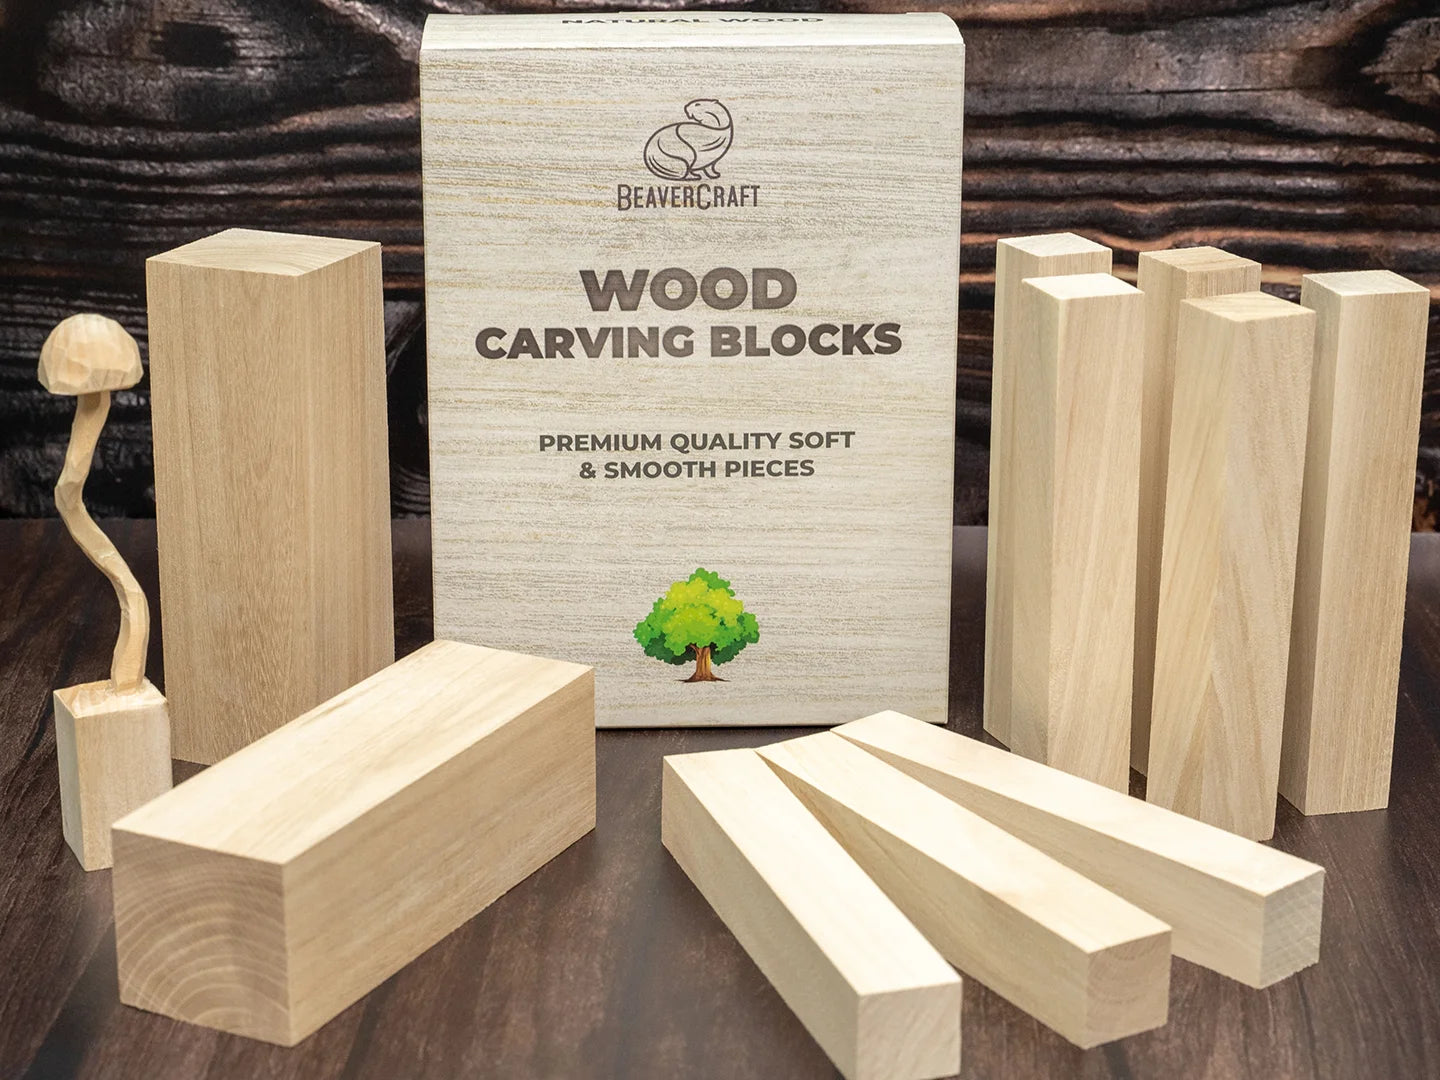  BeaverCraft BW10 Alder Wood Carving Blocks Wood for Whittling  Carving Wood Blocks Whittling Wood Wooden Blocks for Crafts Wood Carving  Wood Blank Cubes : Arts, Crafts & Sewing